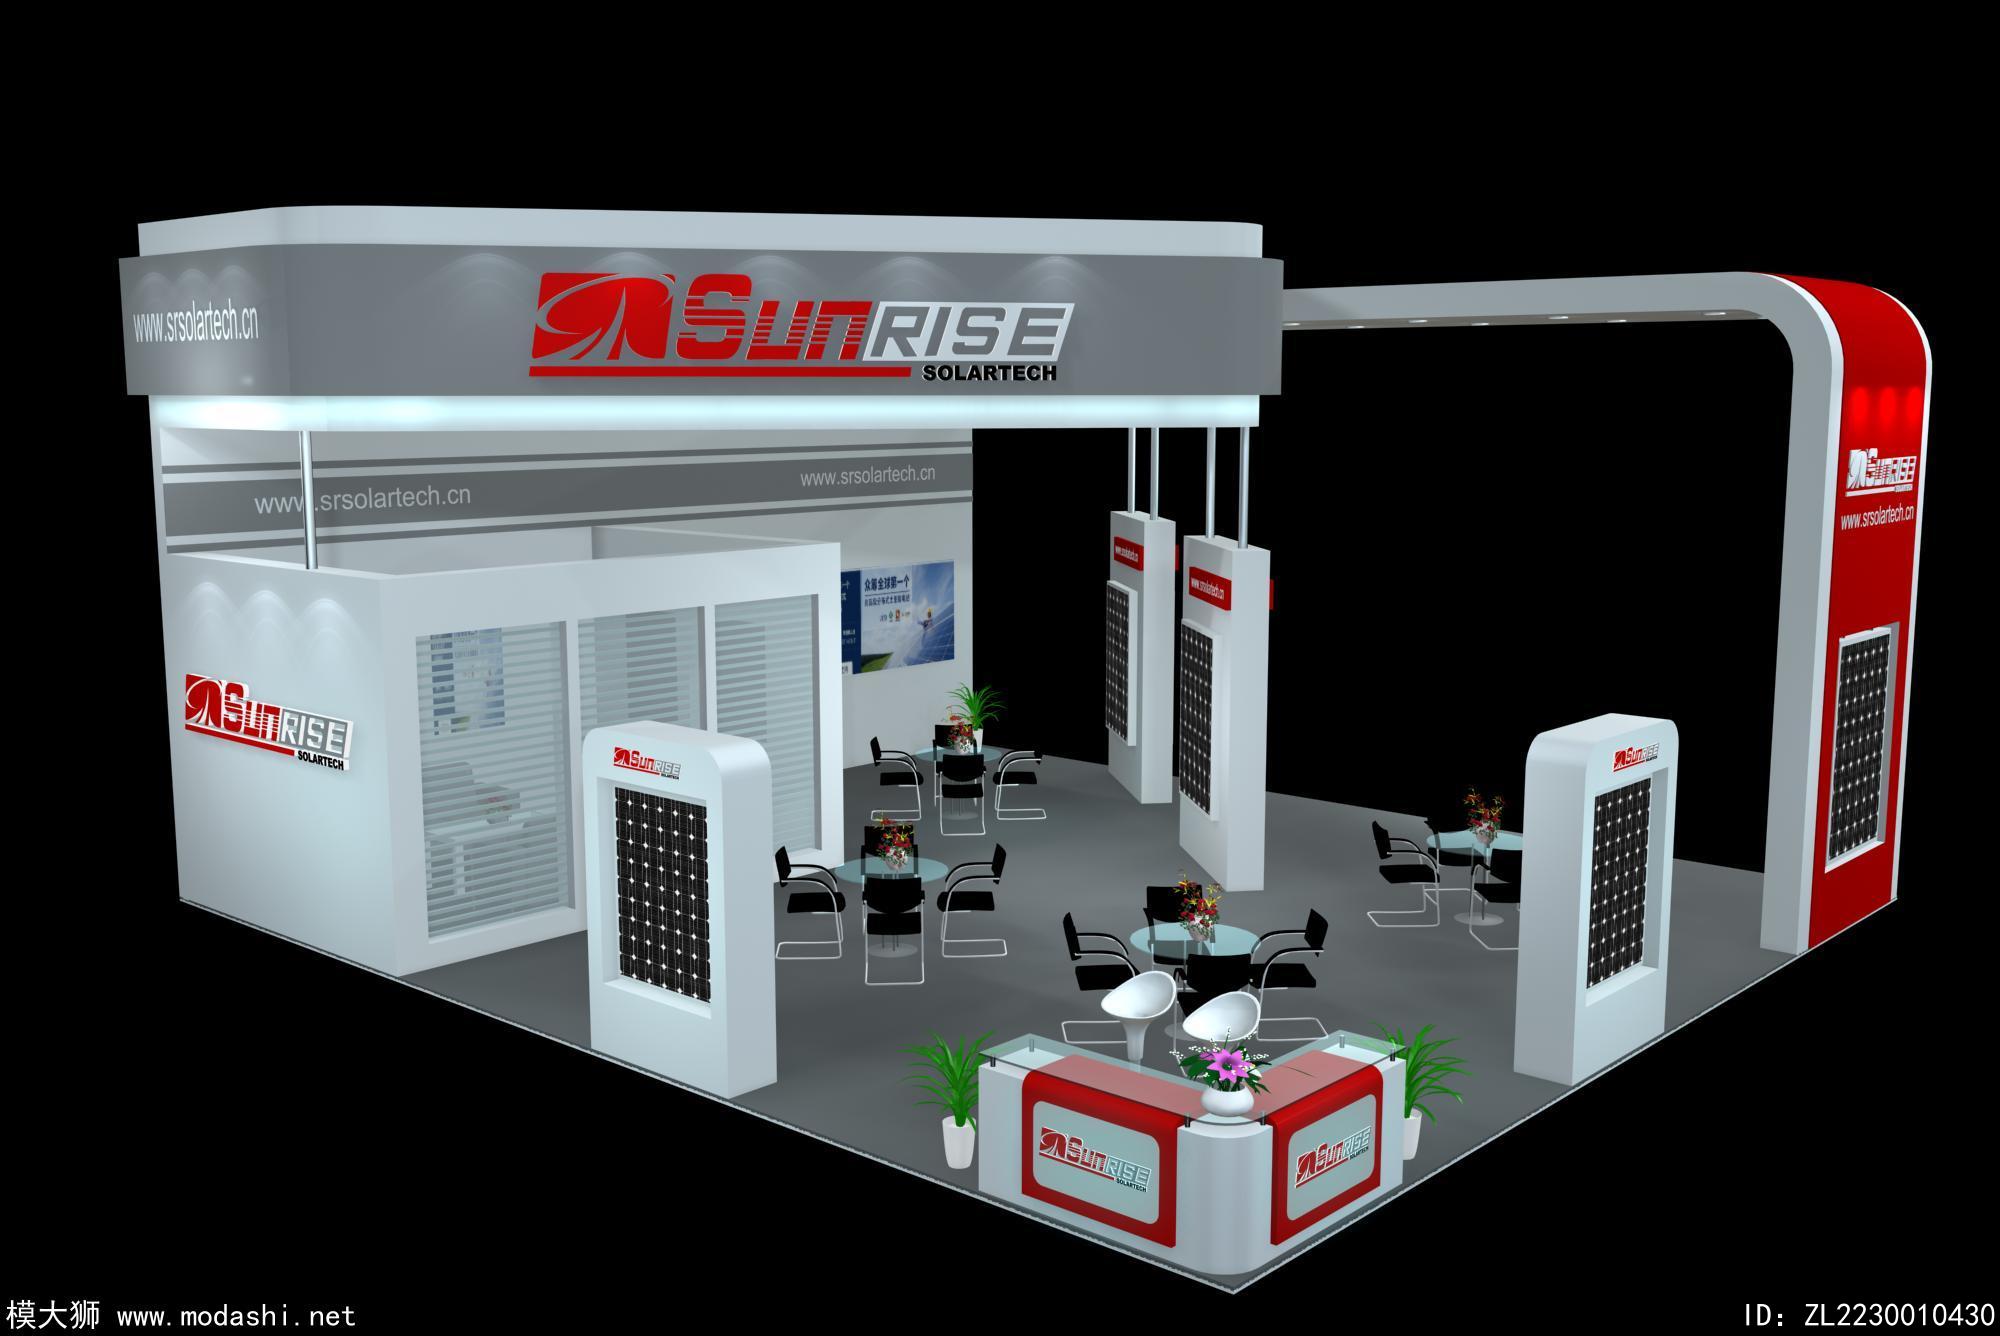 SUNRISE展台模型